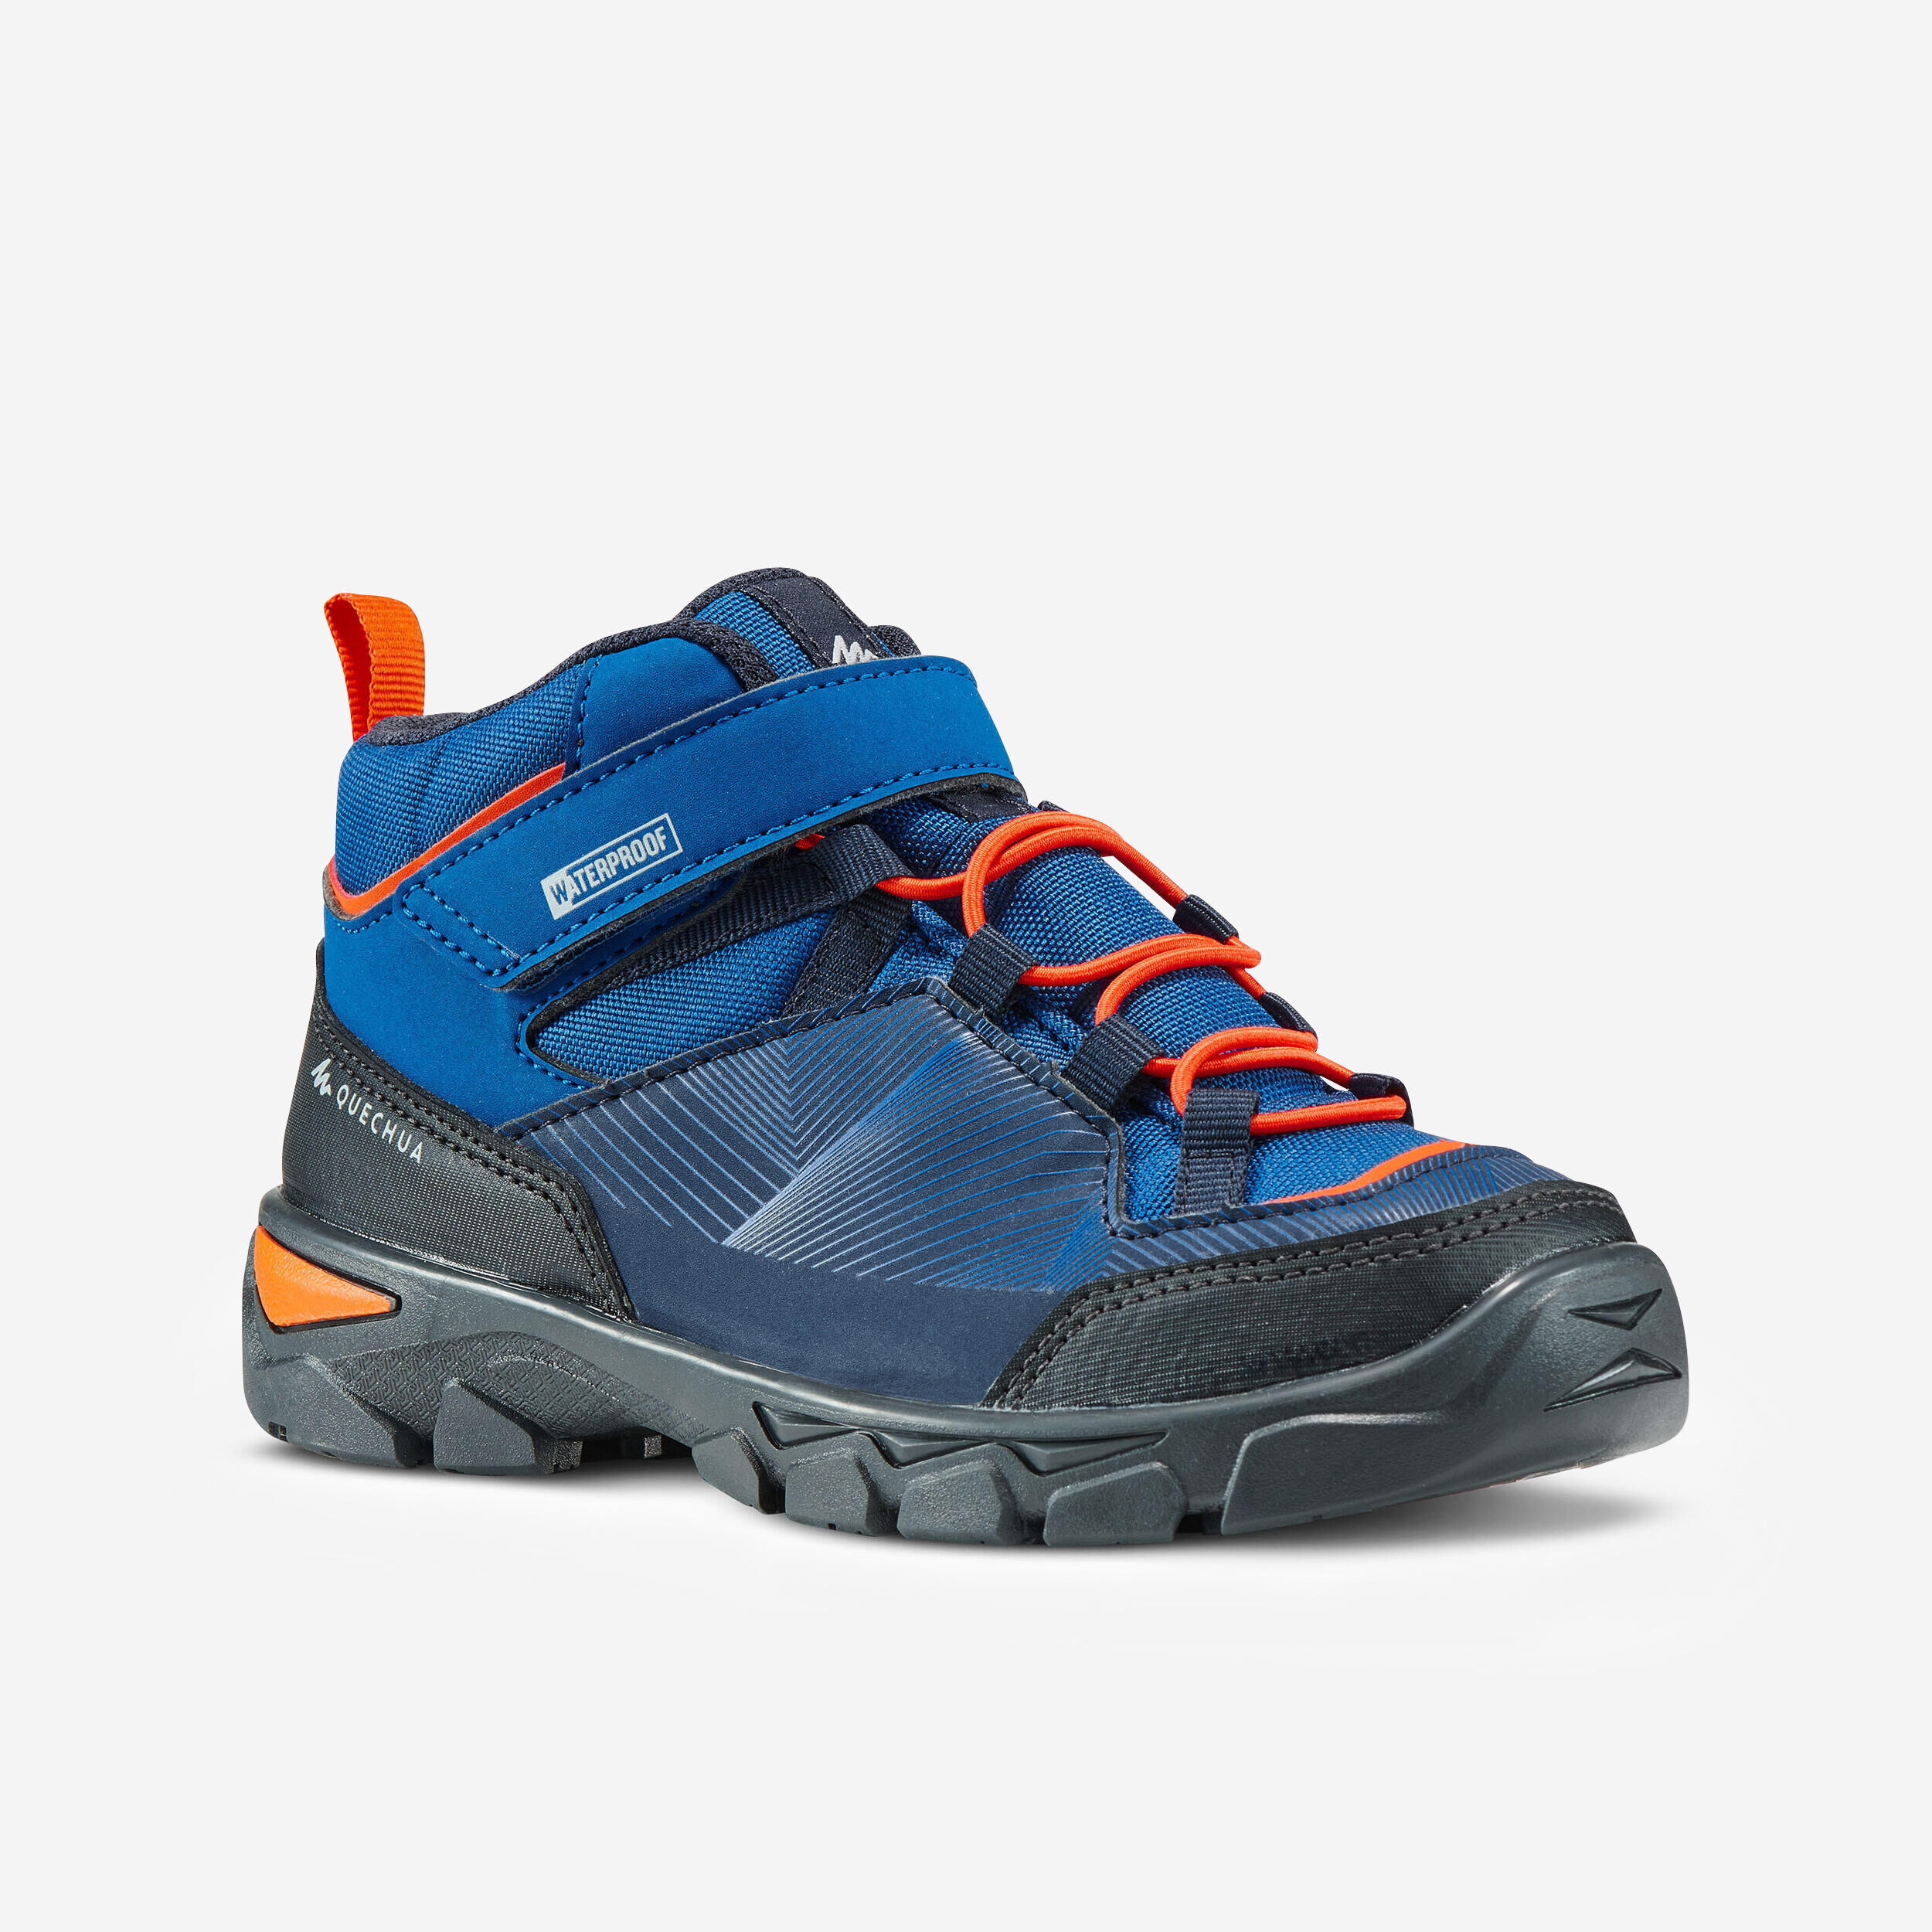 QUECHUA Children's waterproof walking shoes - MH120 MID blue - size jr. 10 - ad. 2